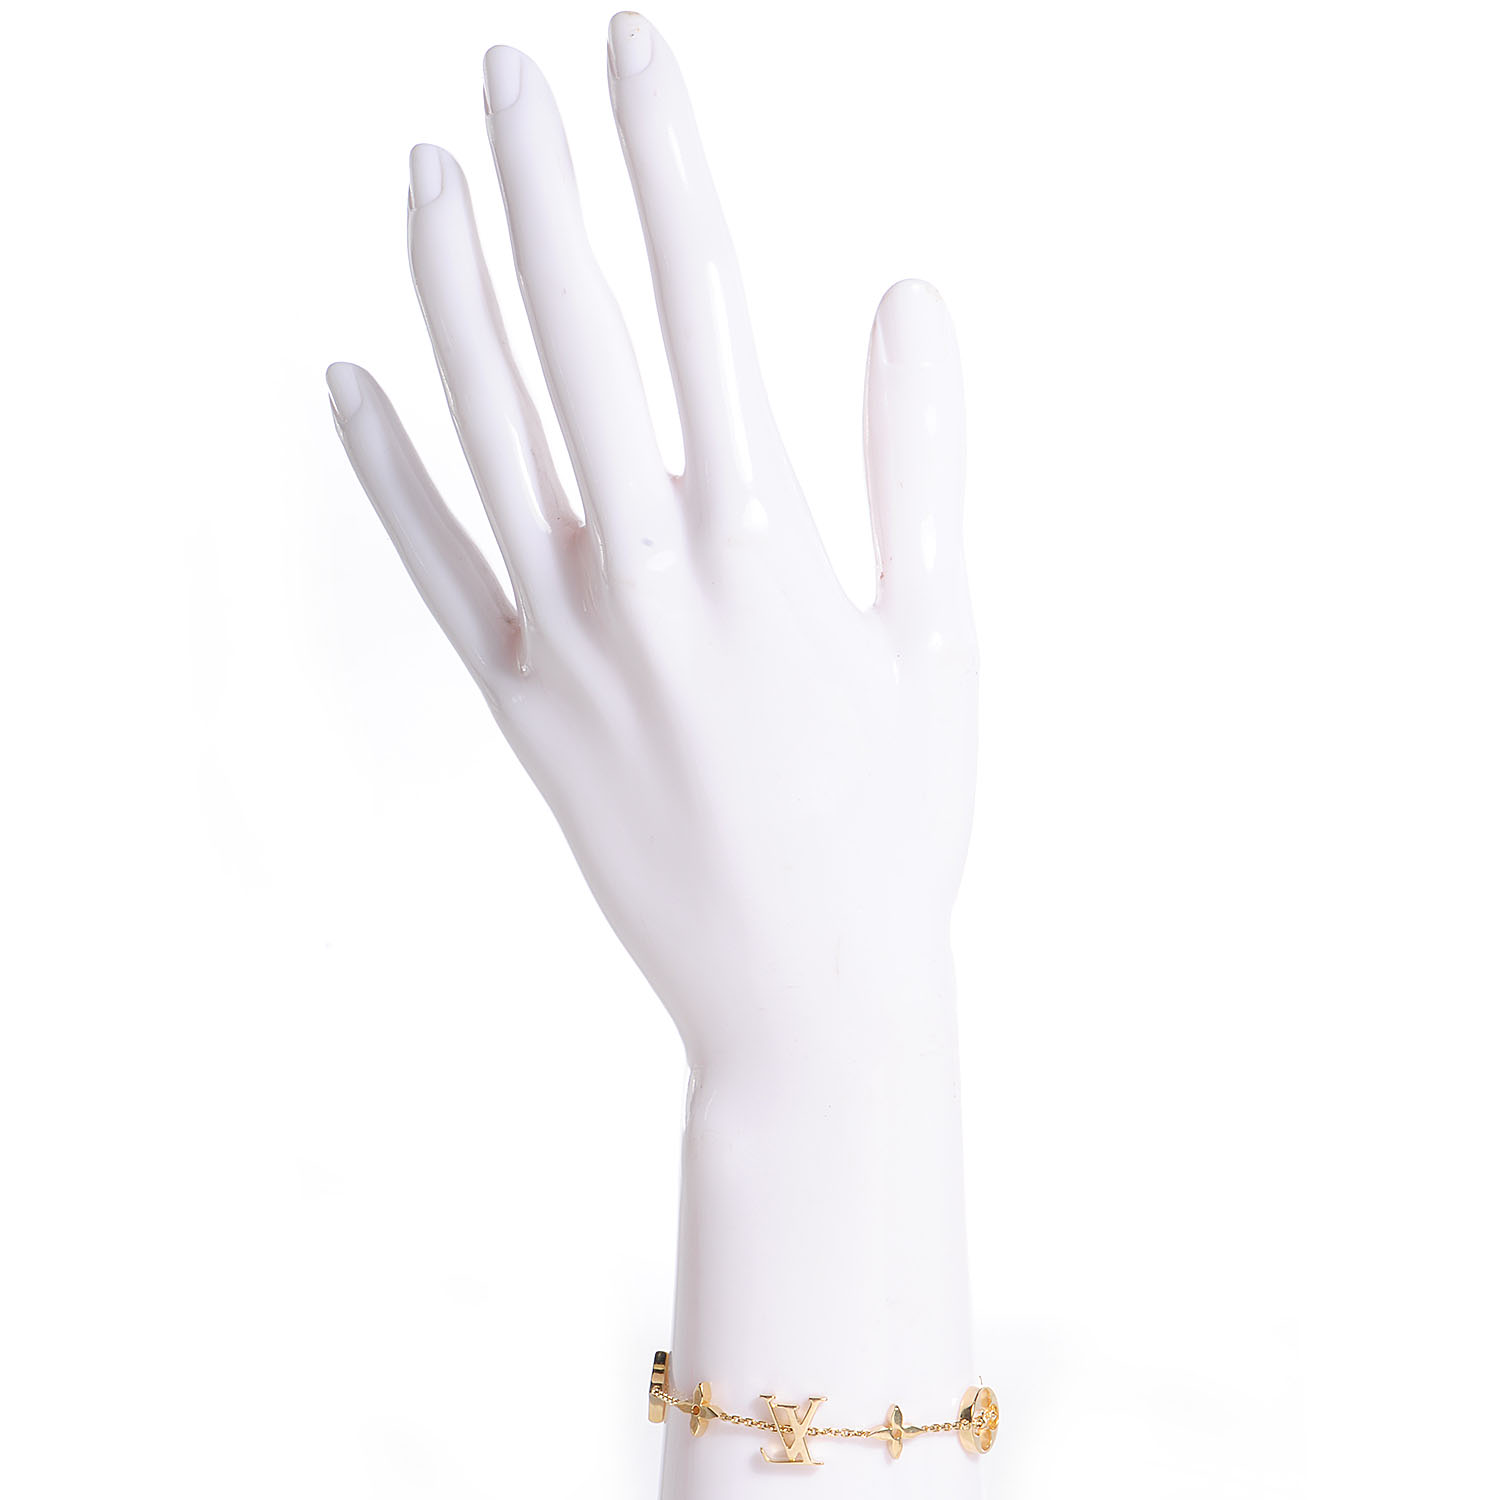 LOUIS VUITTON 18K White Gold Monogram Bracelet 496205